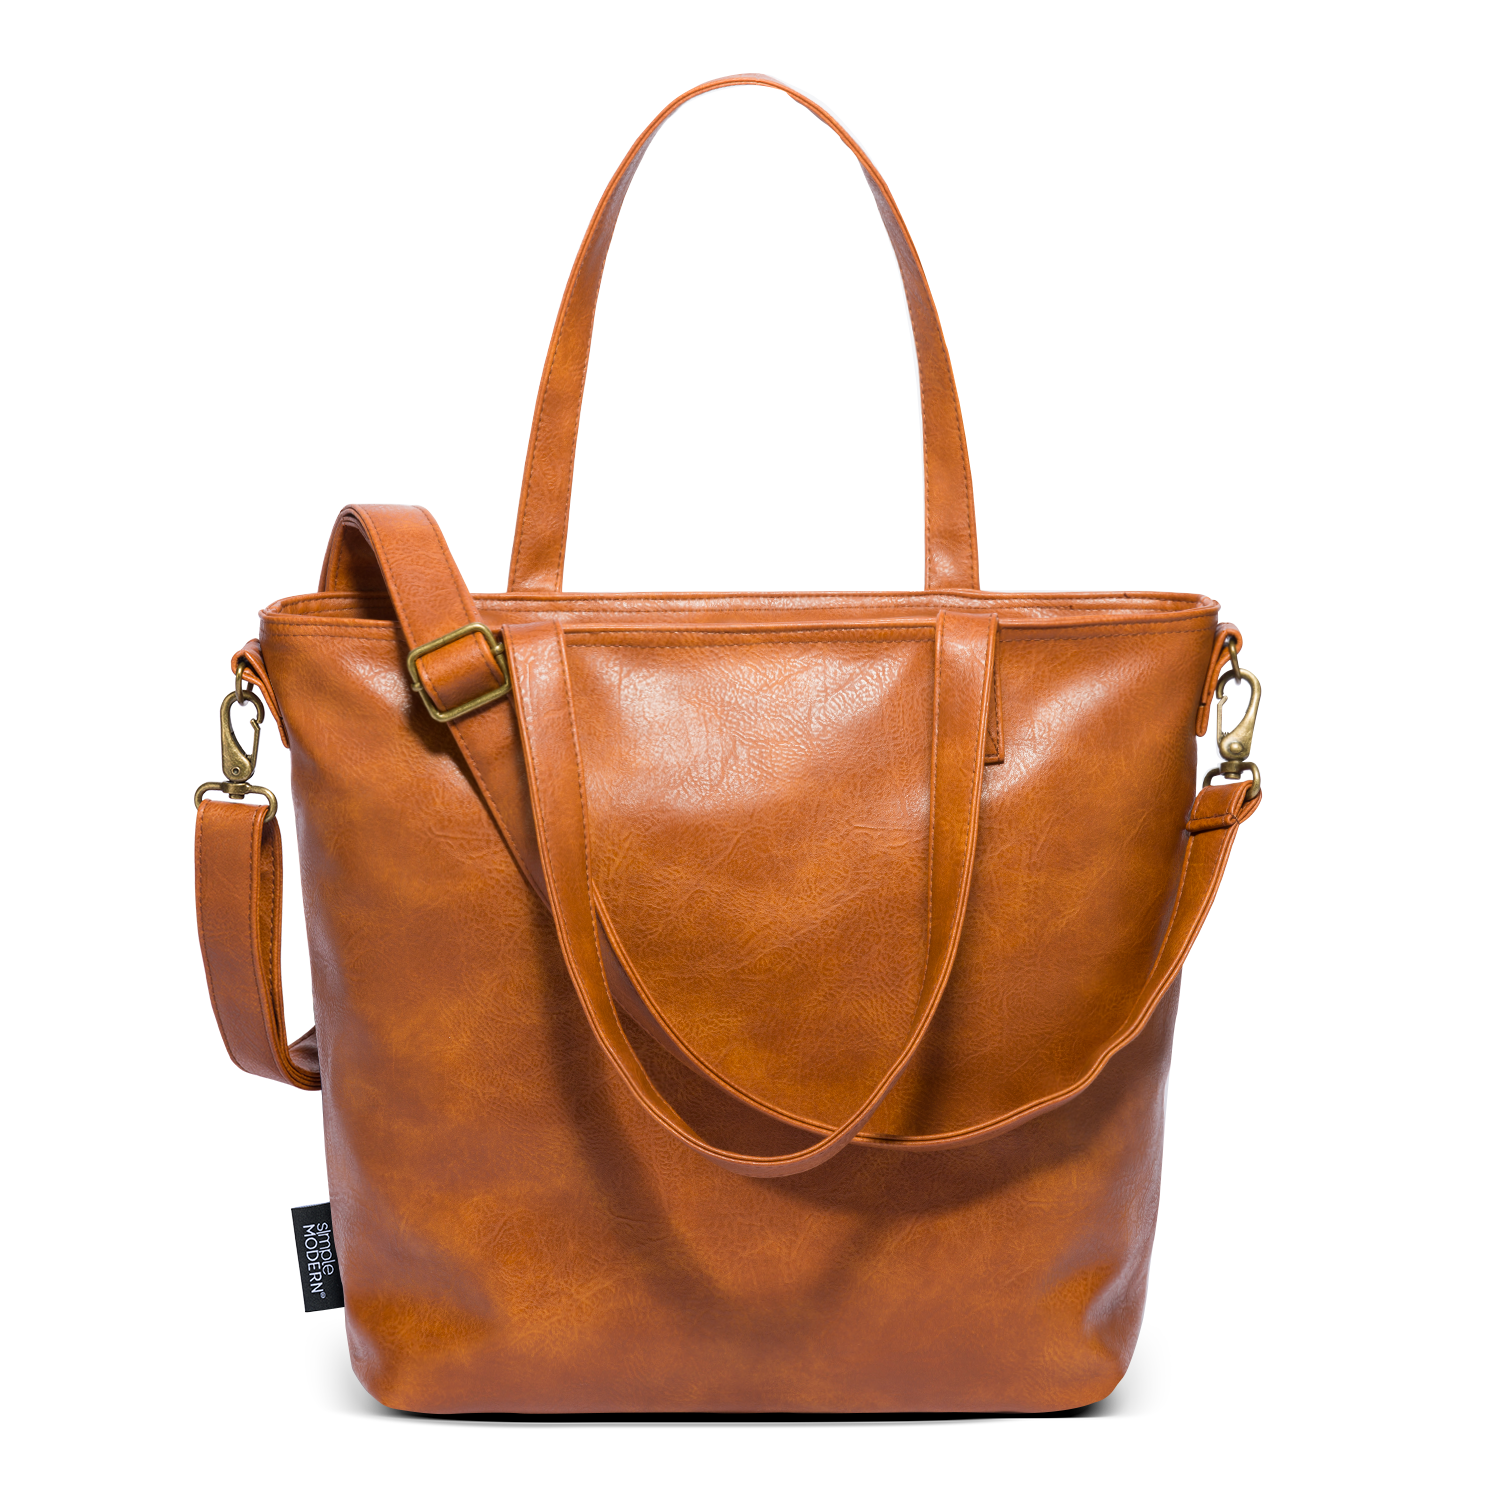 The Getaway Bag from Simple Modern 